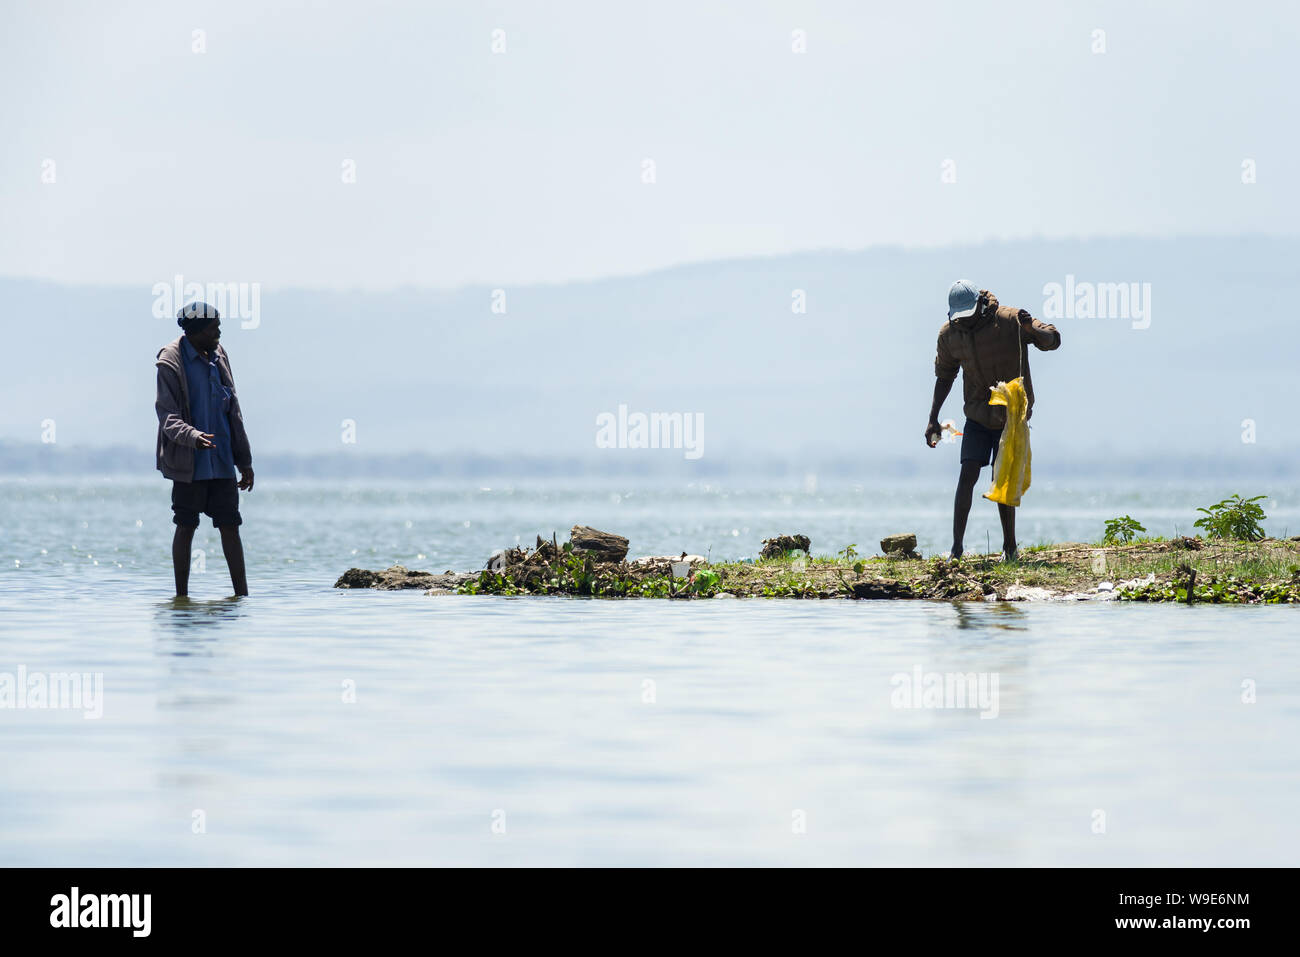 Two Kenyan fishermen stand by the shore catching fish, lake Naivasha, Kenya, East Africa Stock Photo